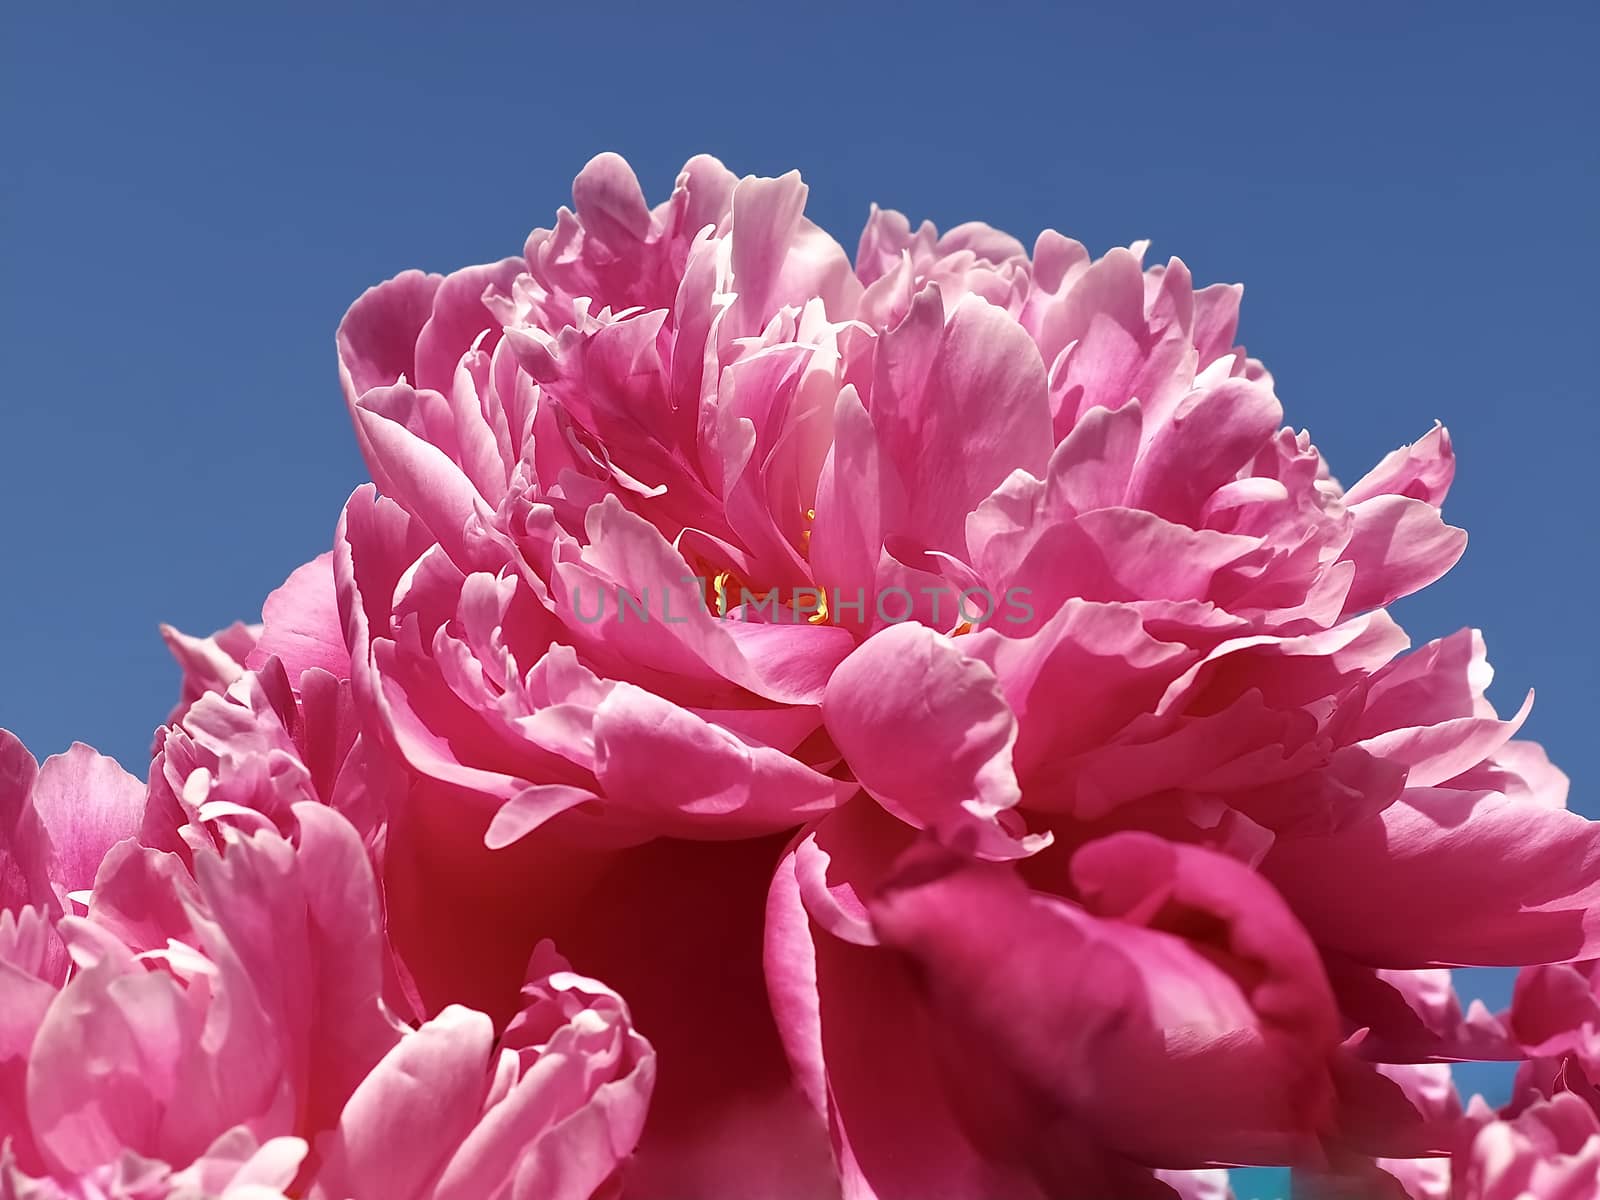 Macro of a pink peony rose flower